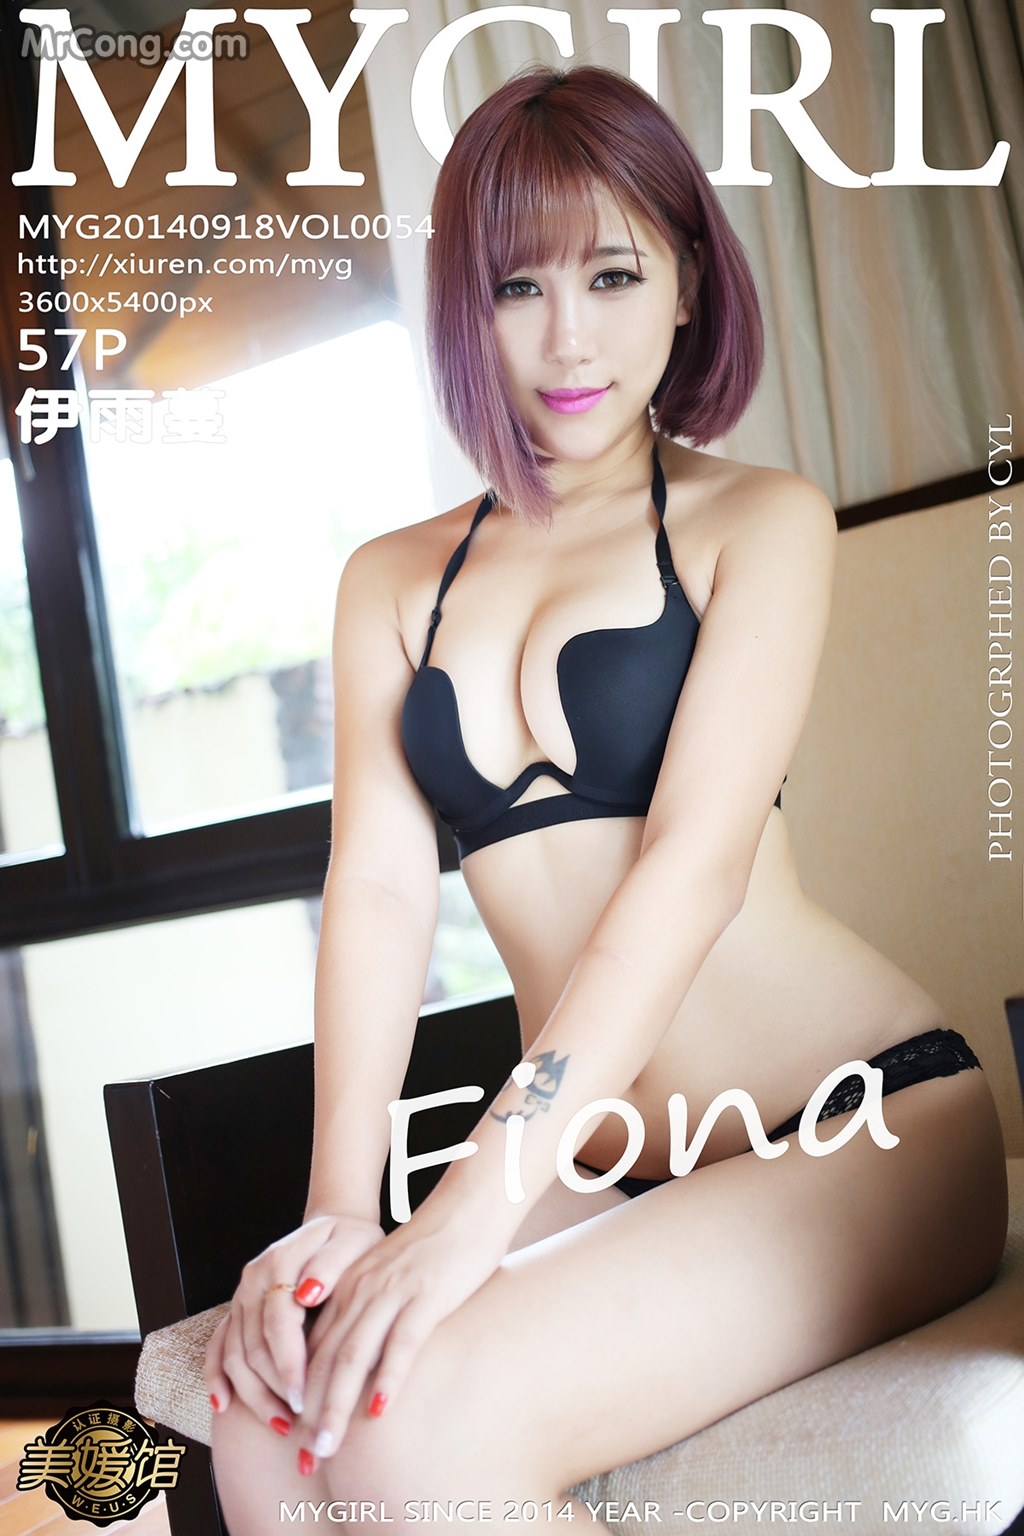 MyGirl Vol.054: Model Fiona (伊 雨 蔓) (58 photos)